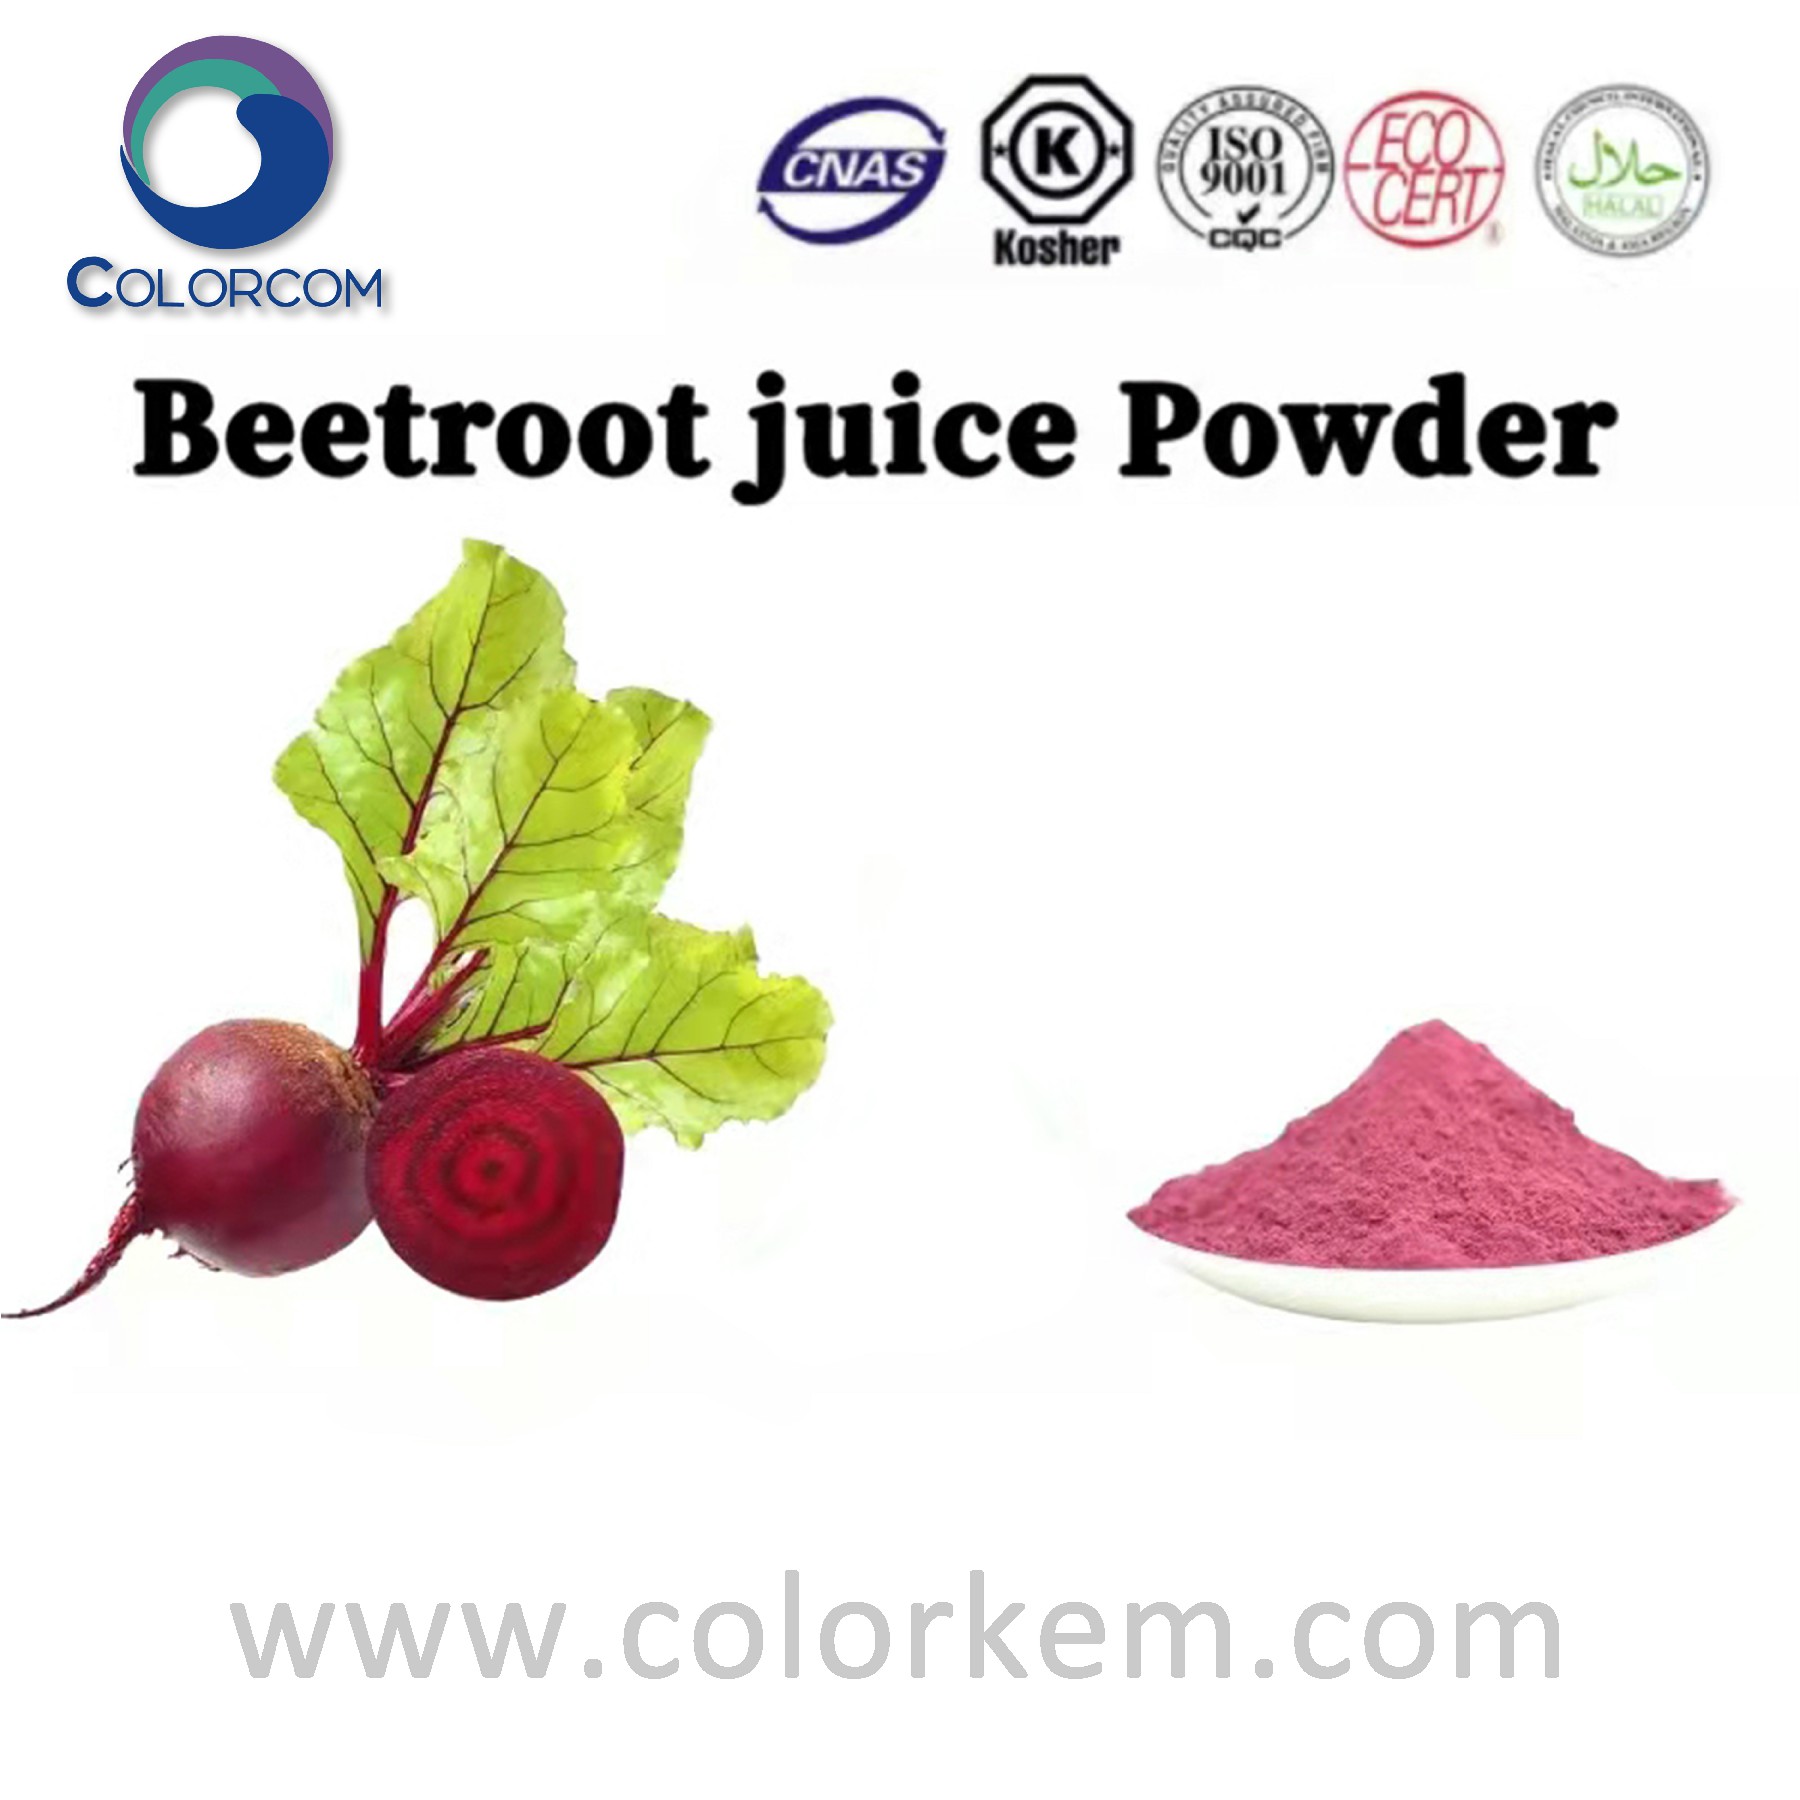 Beetroot juice powder